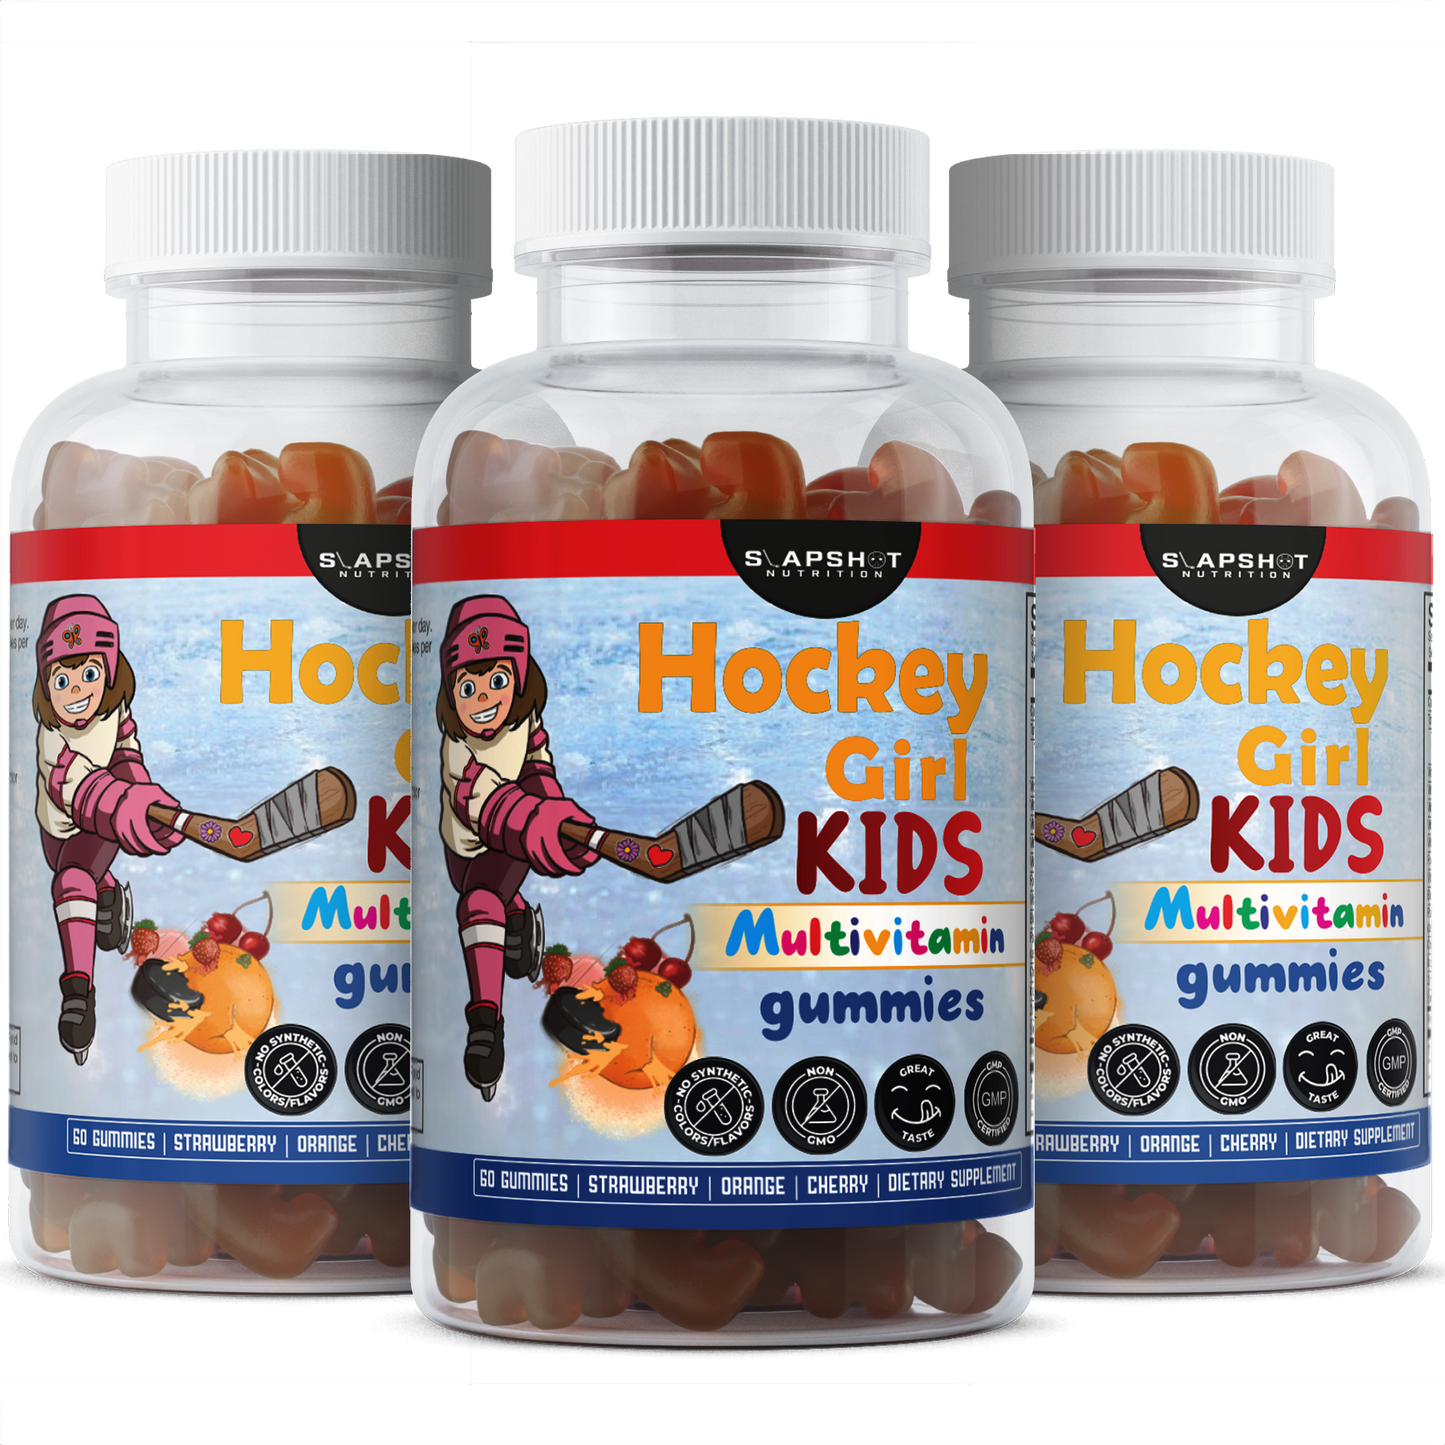 Hockey Girl Kid's - Complete Multivitamin Gummy